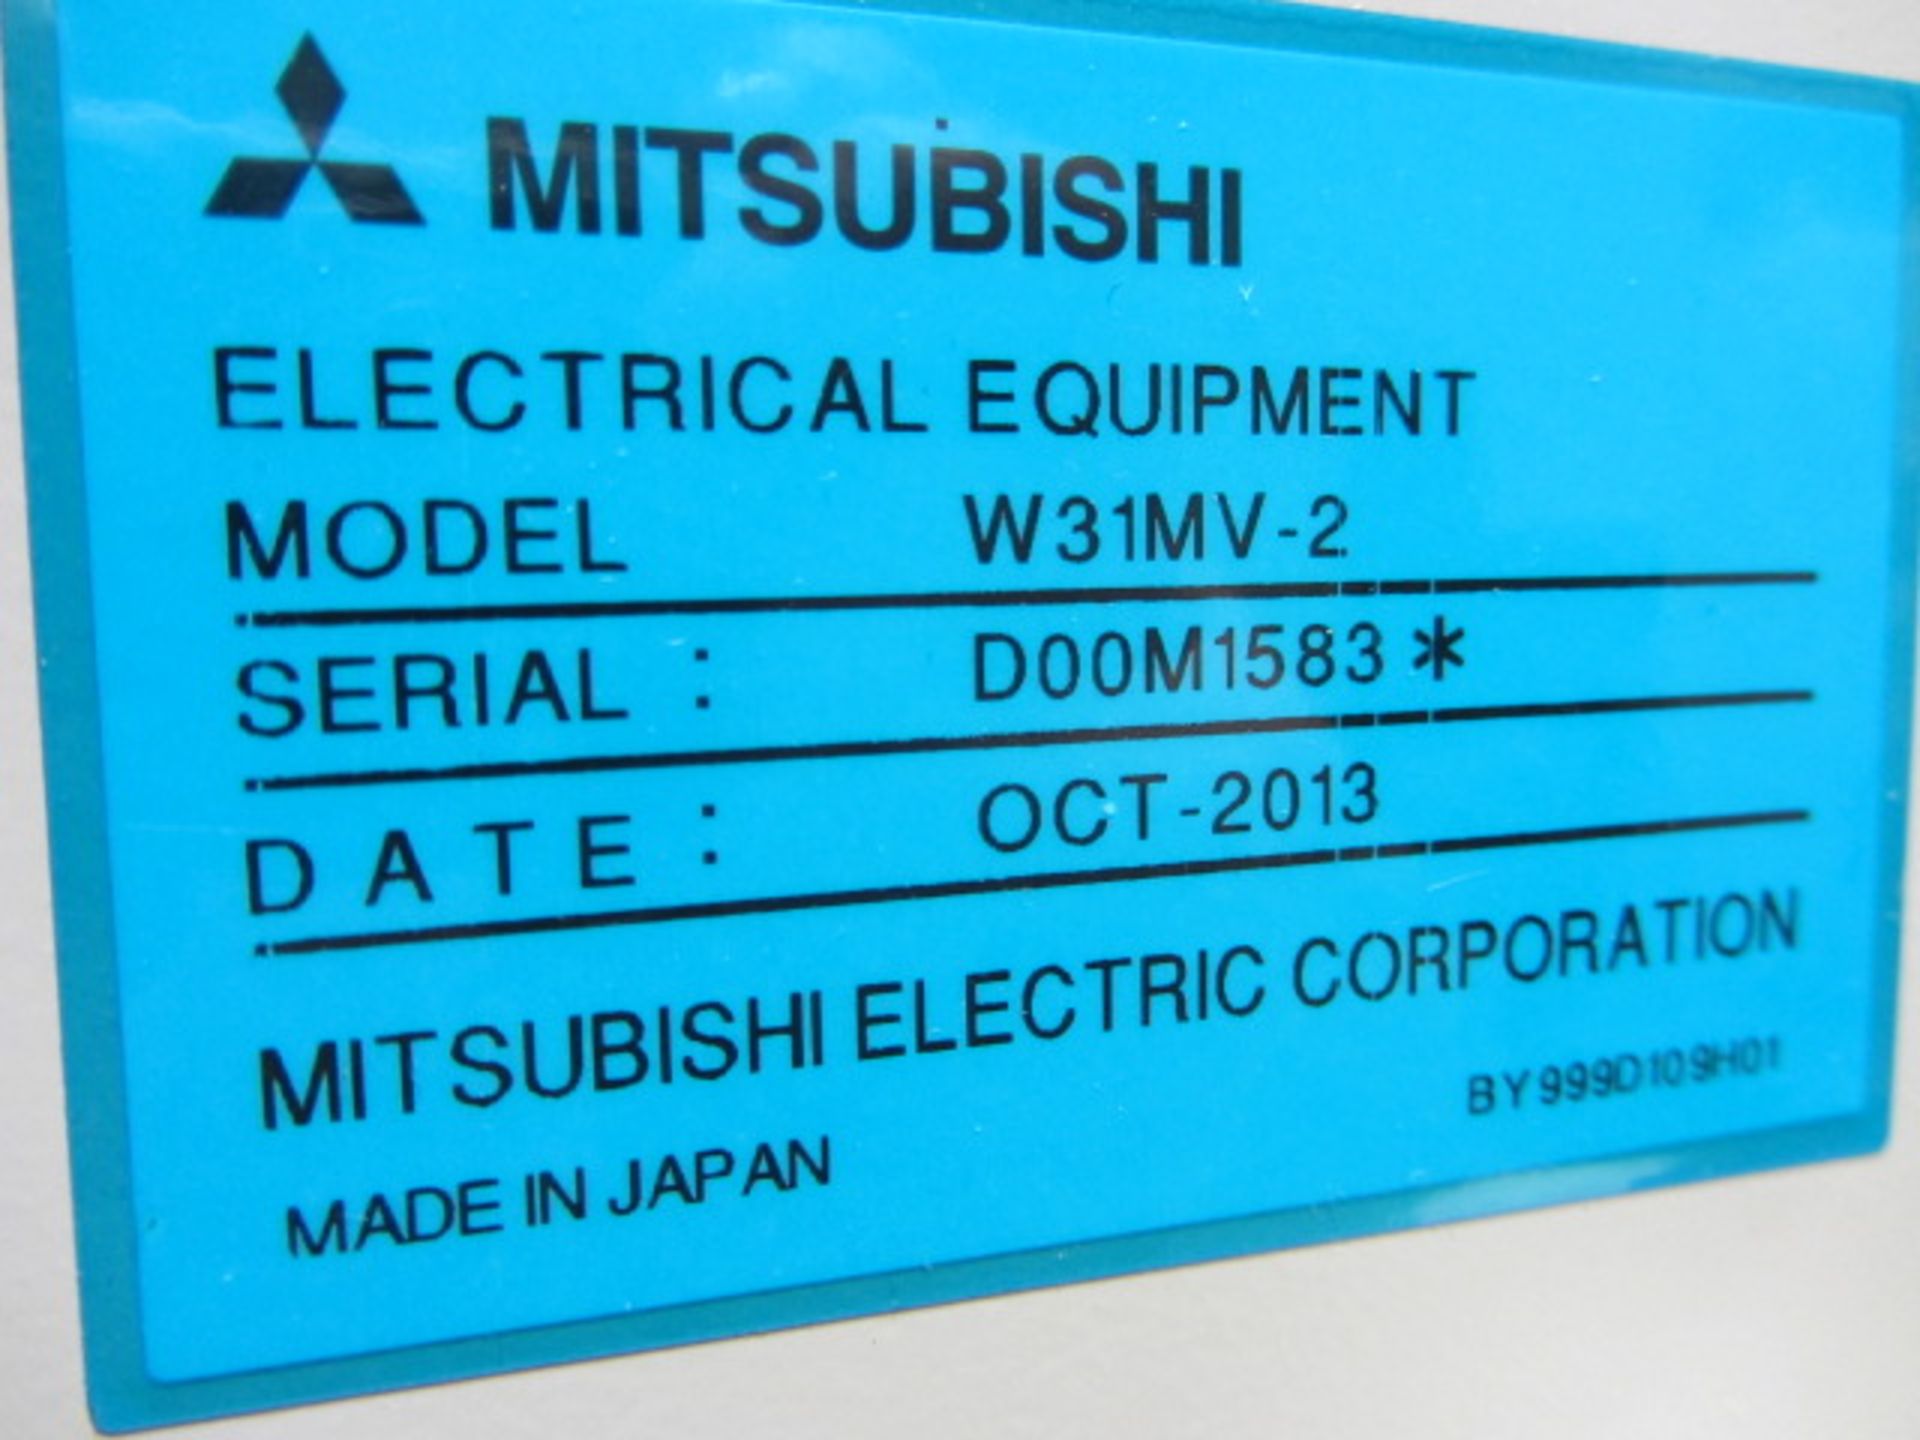 Mitsubishi MD PRO III CNC Wire EDM Machine with 16'' x 16'' x 8'' Travels, Auto-Threading, - Image 8 of 9